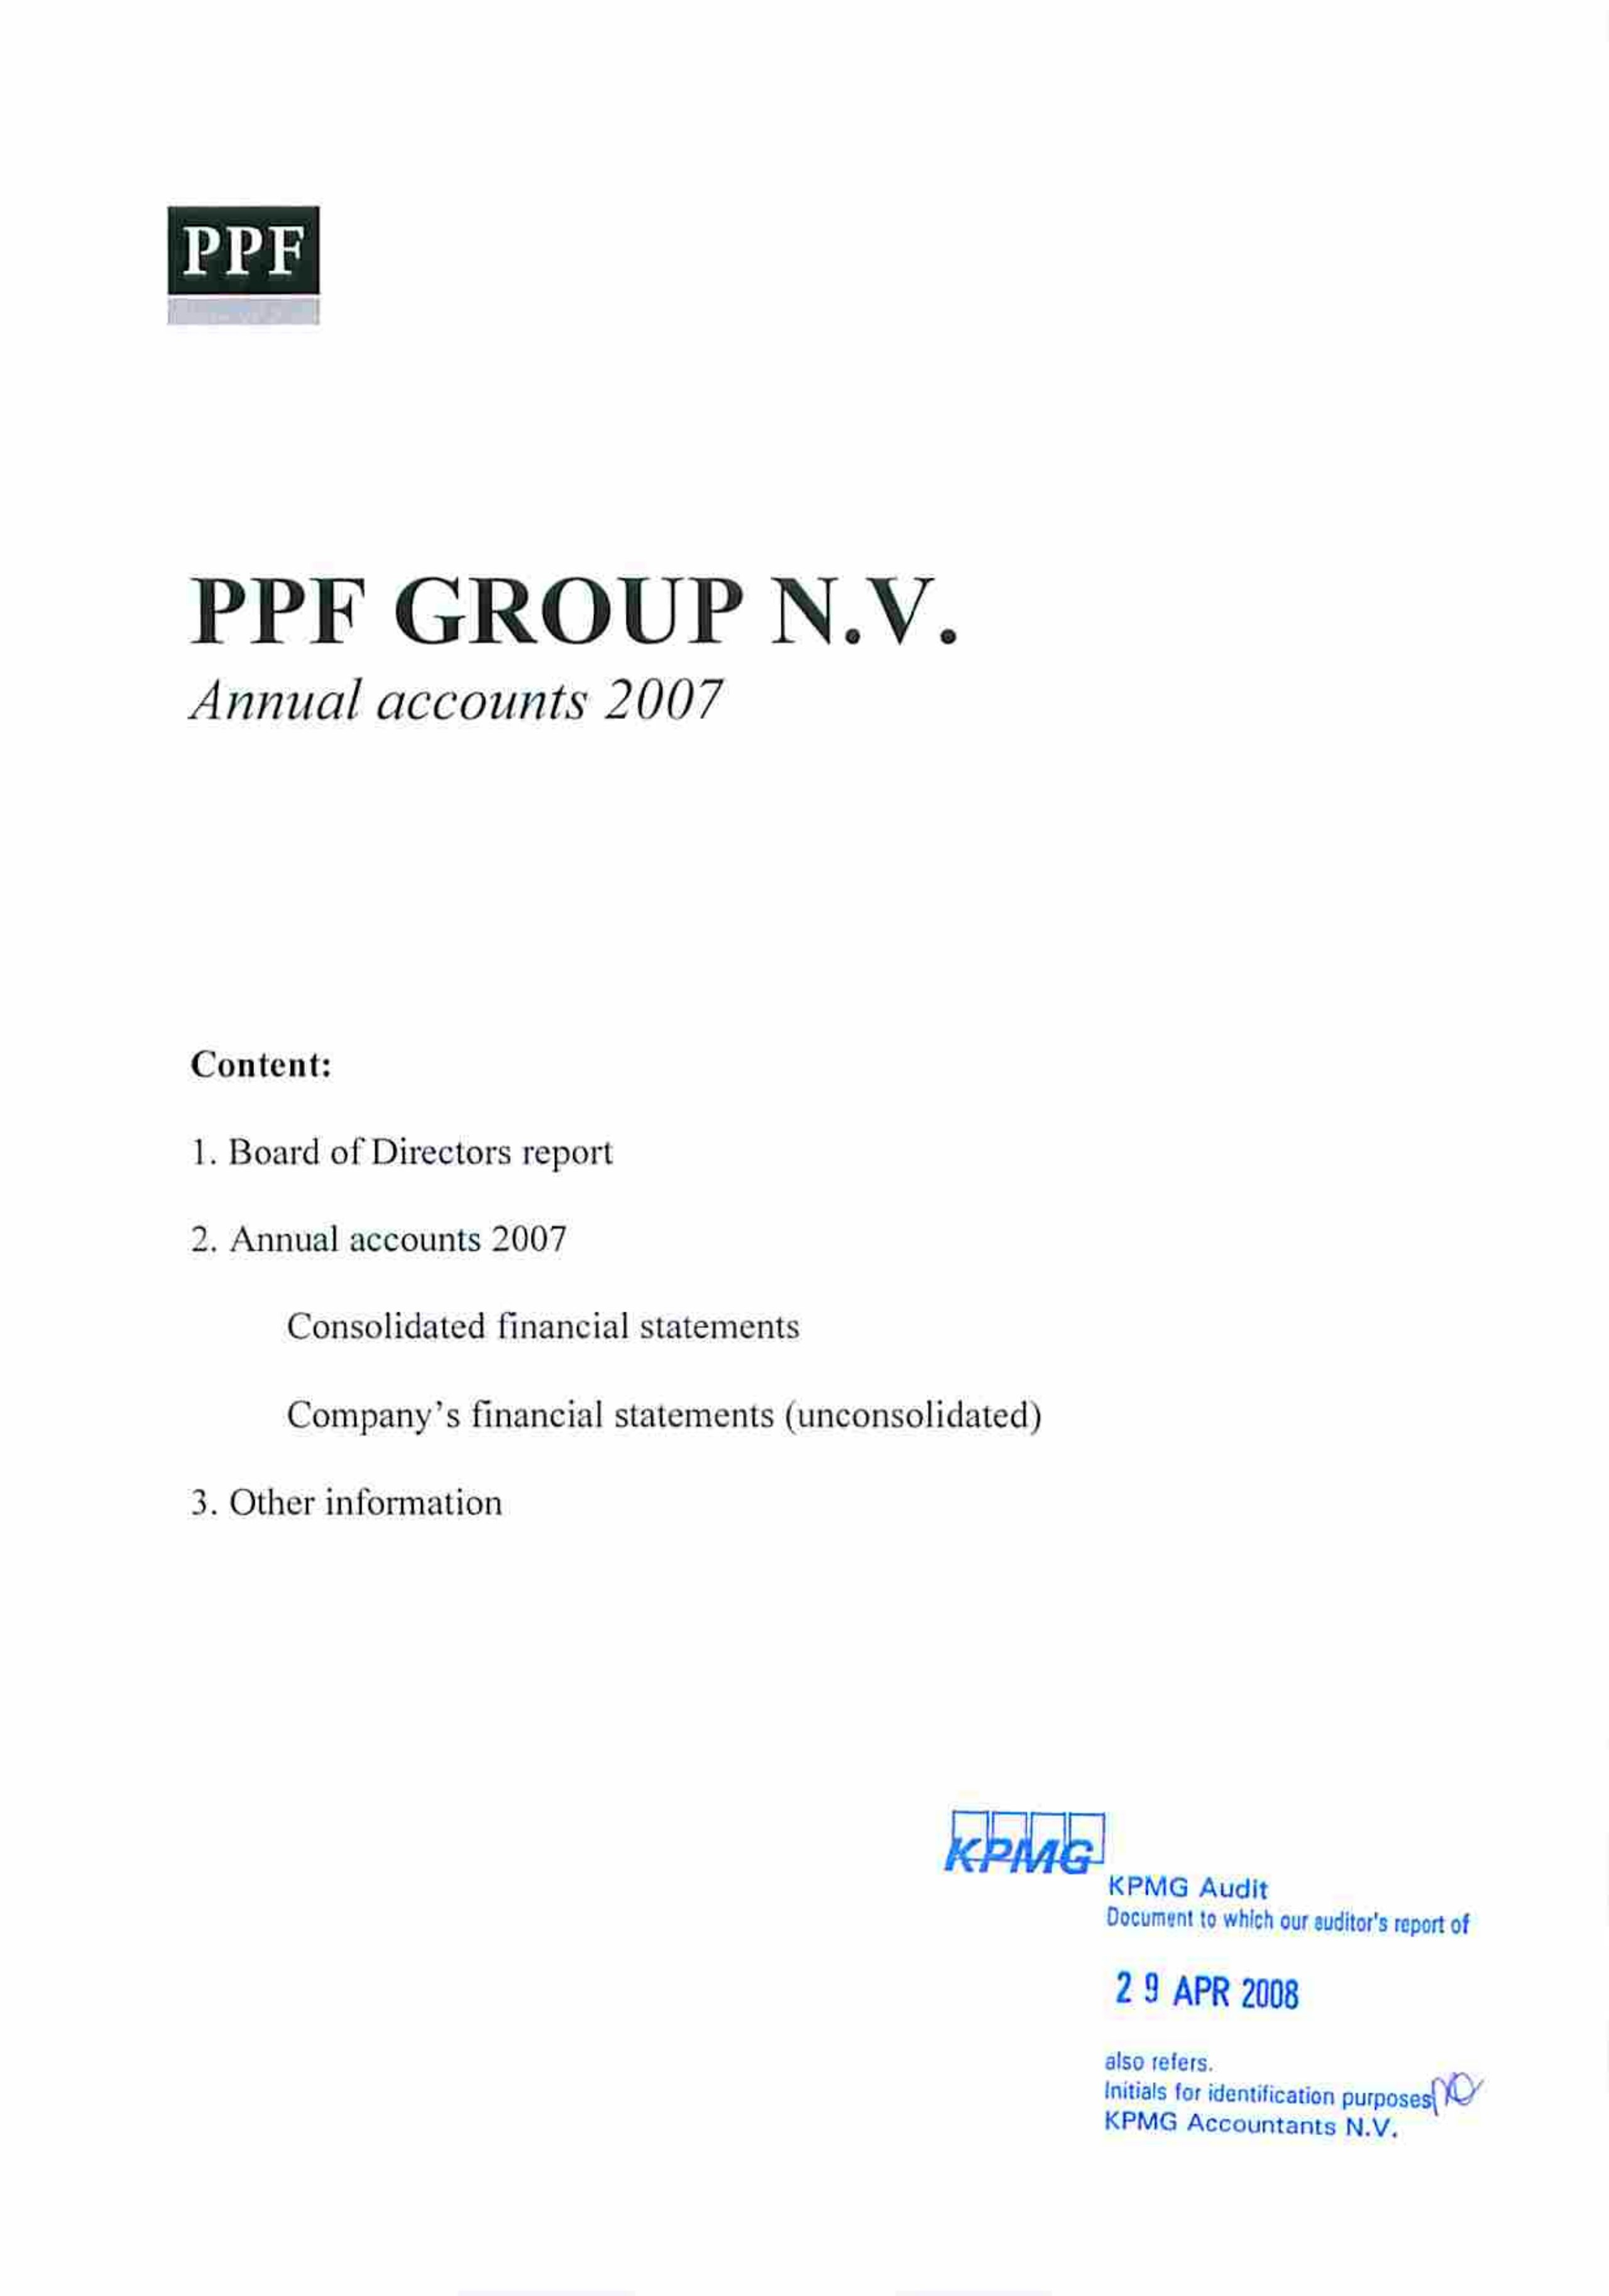 Annual Accounts PPF Group N.V. 2007 (17/6/2007)